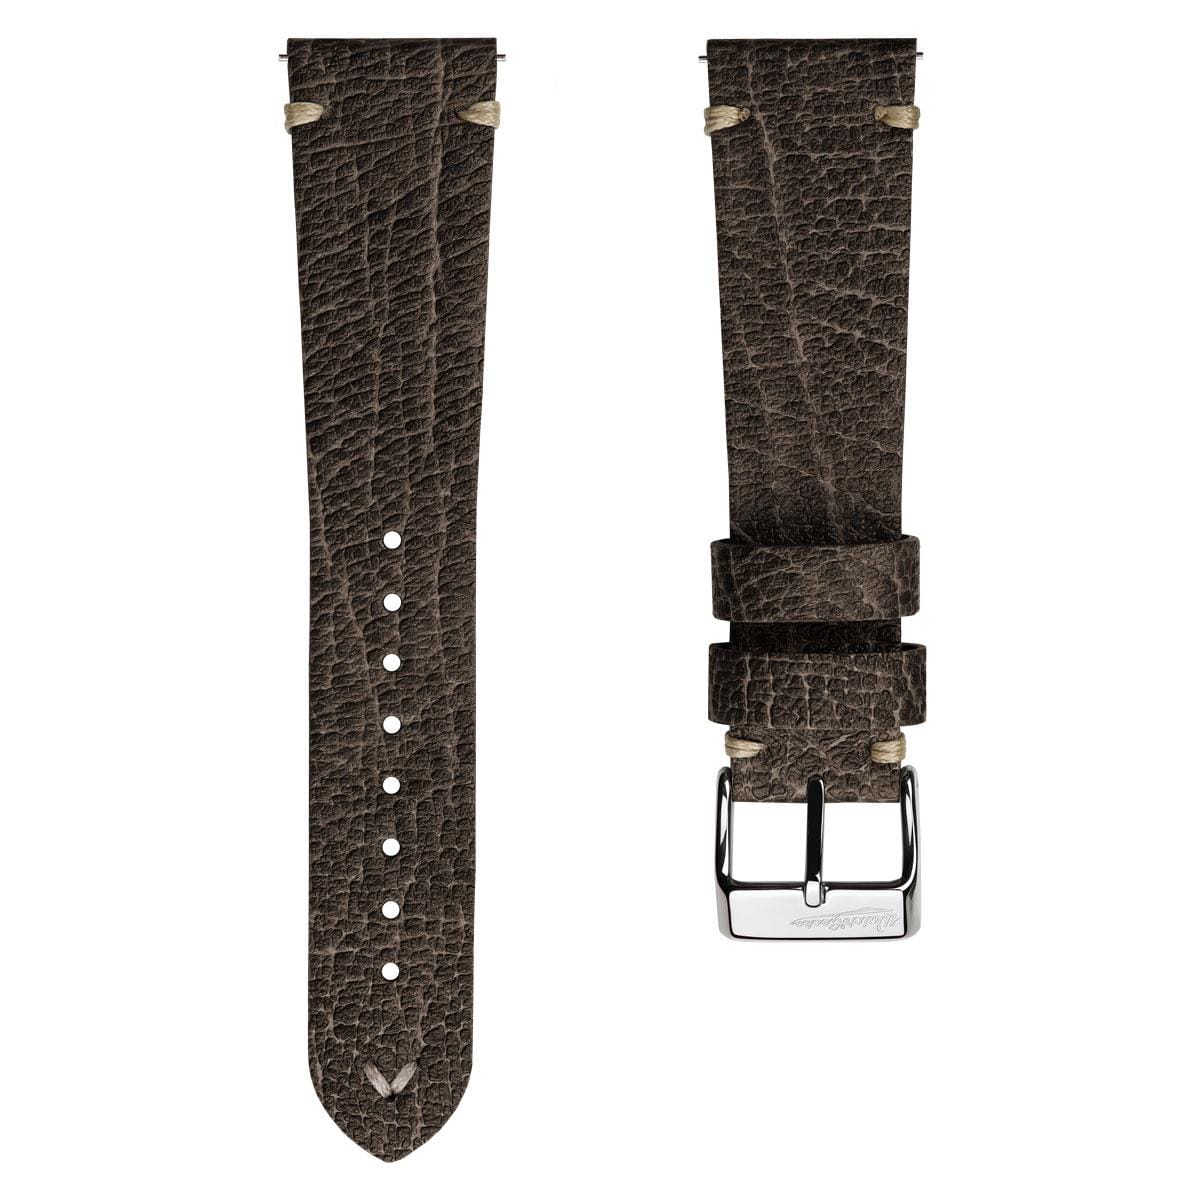 V-Stitch Vegan Italian Leather Watch Strap - Textured Hawthorn Brown